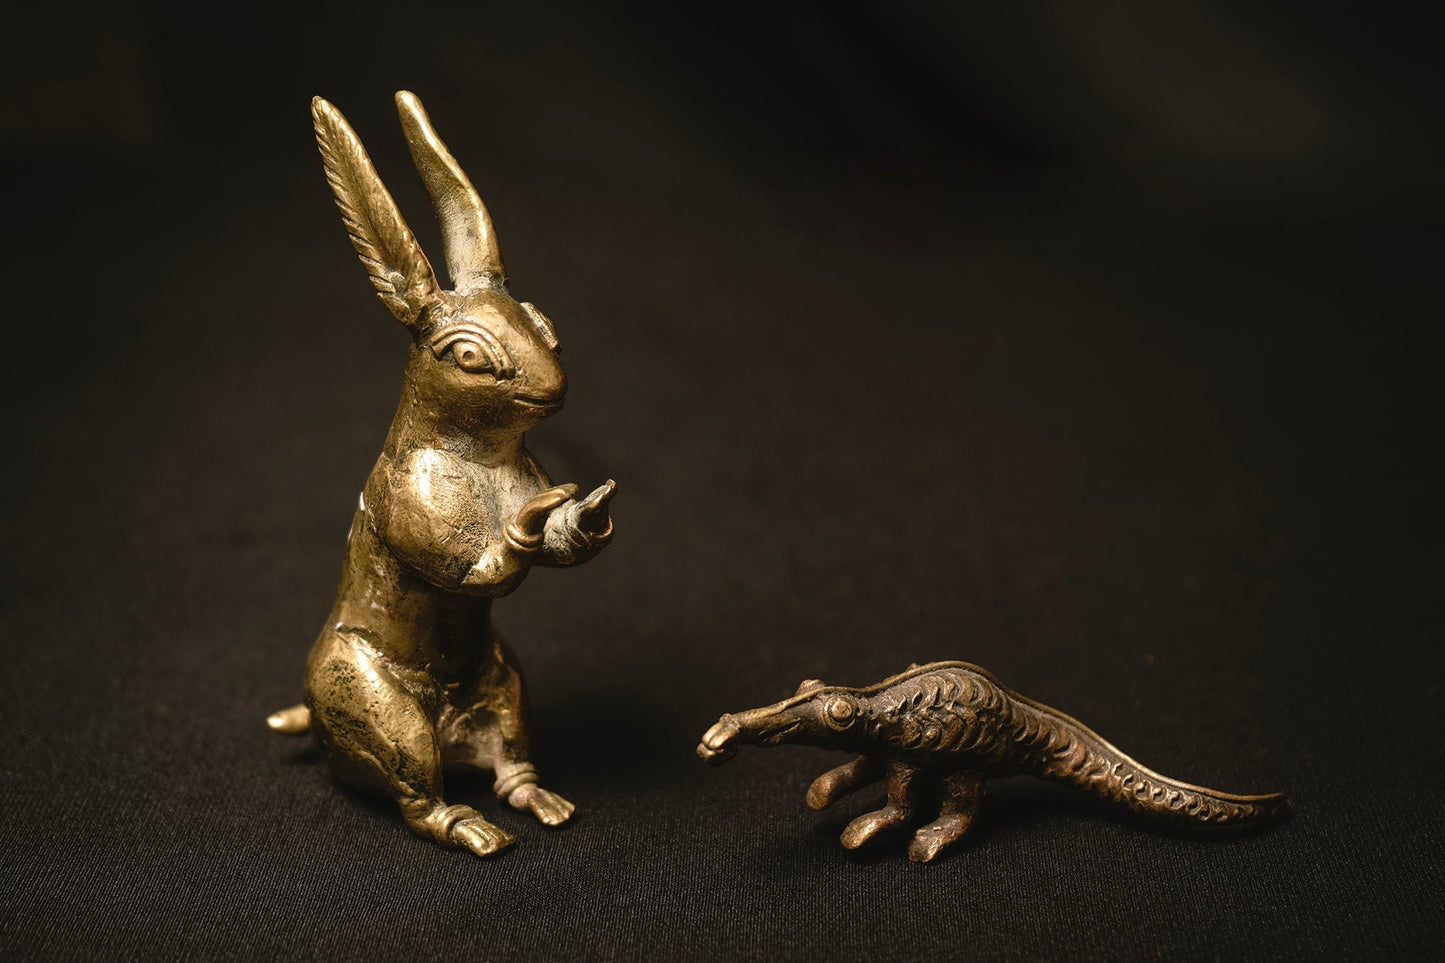 Dokra Craft Animals- The Rabbit & The Miniature Crocodile